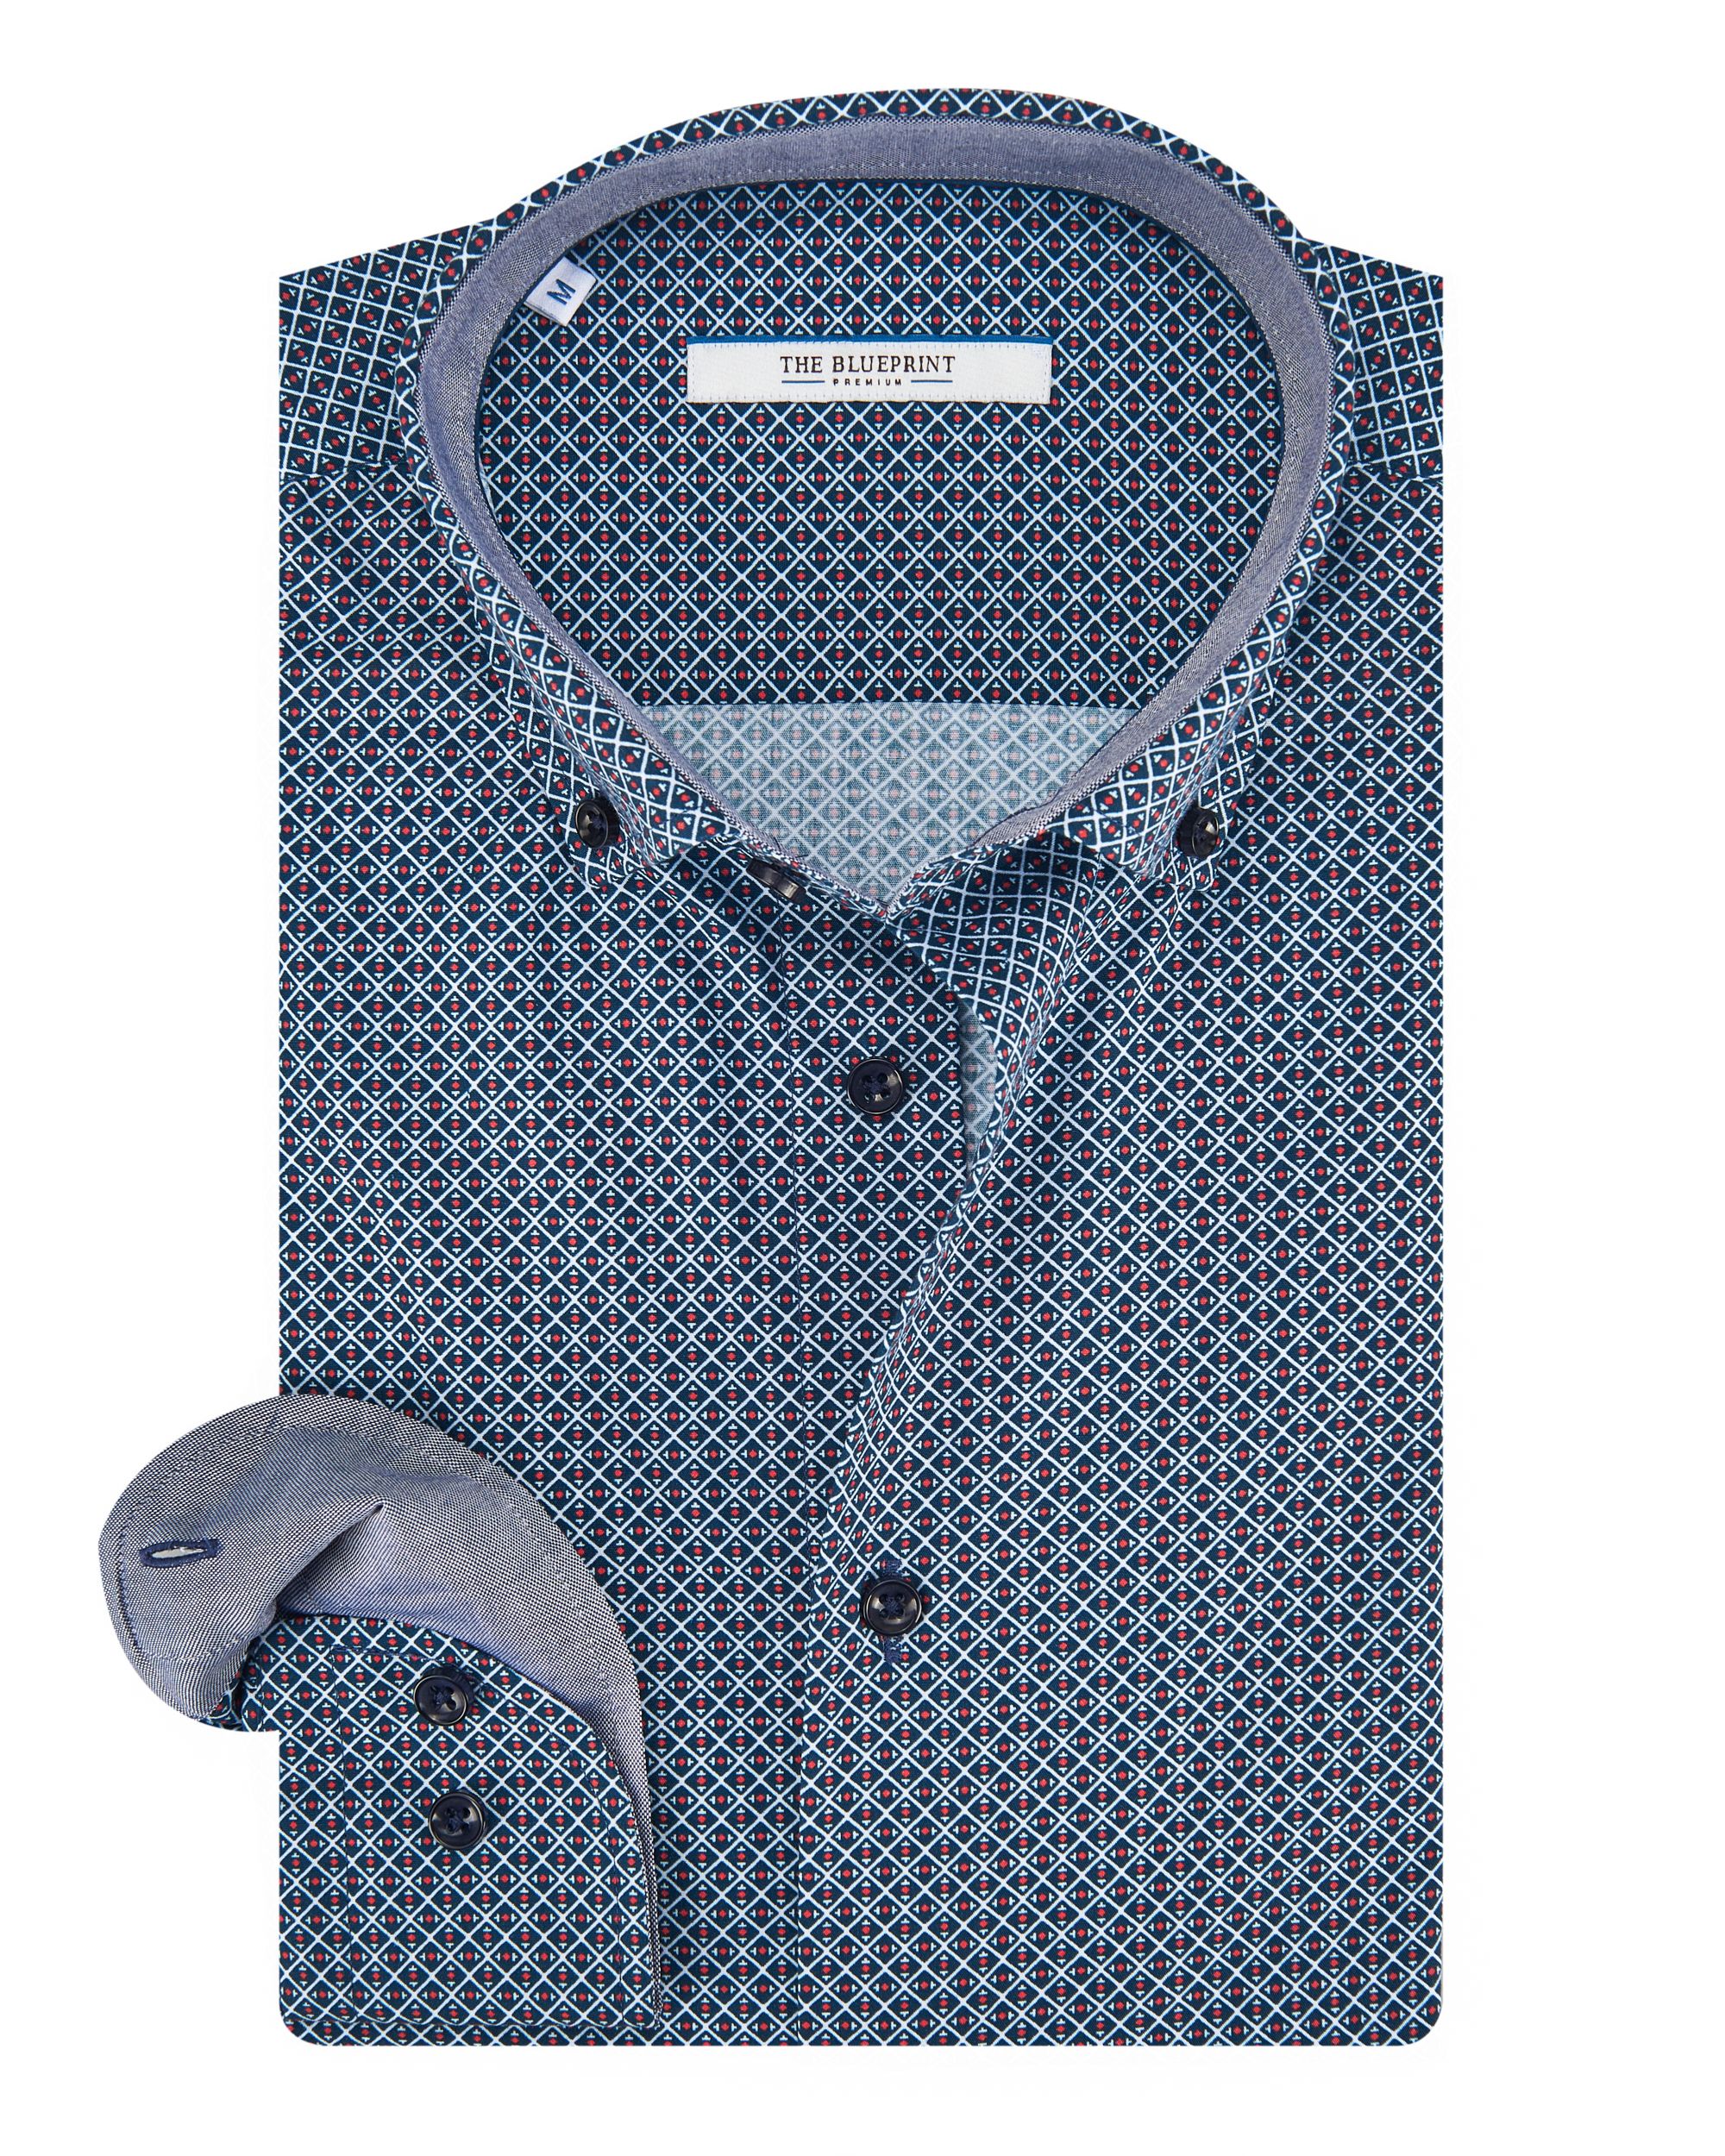 The BLUEPRINT Premium Trendy overhemd LM Blauw dessin 084495-001-L